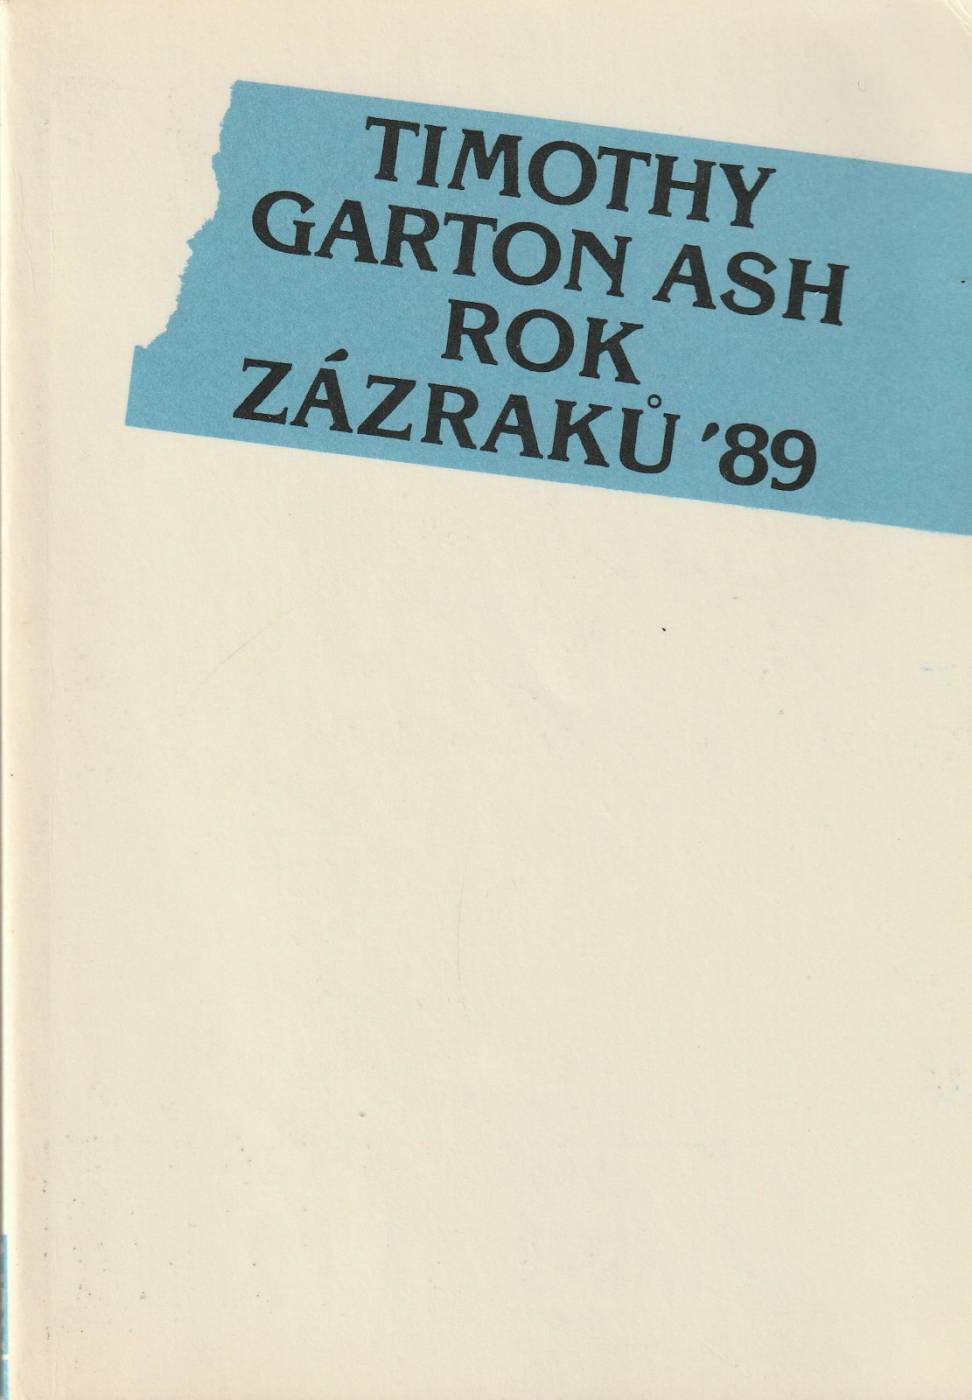 Garton Ash, Timothy – Rok zázraků '89